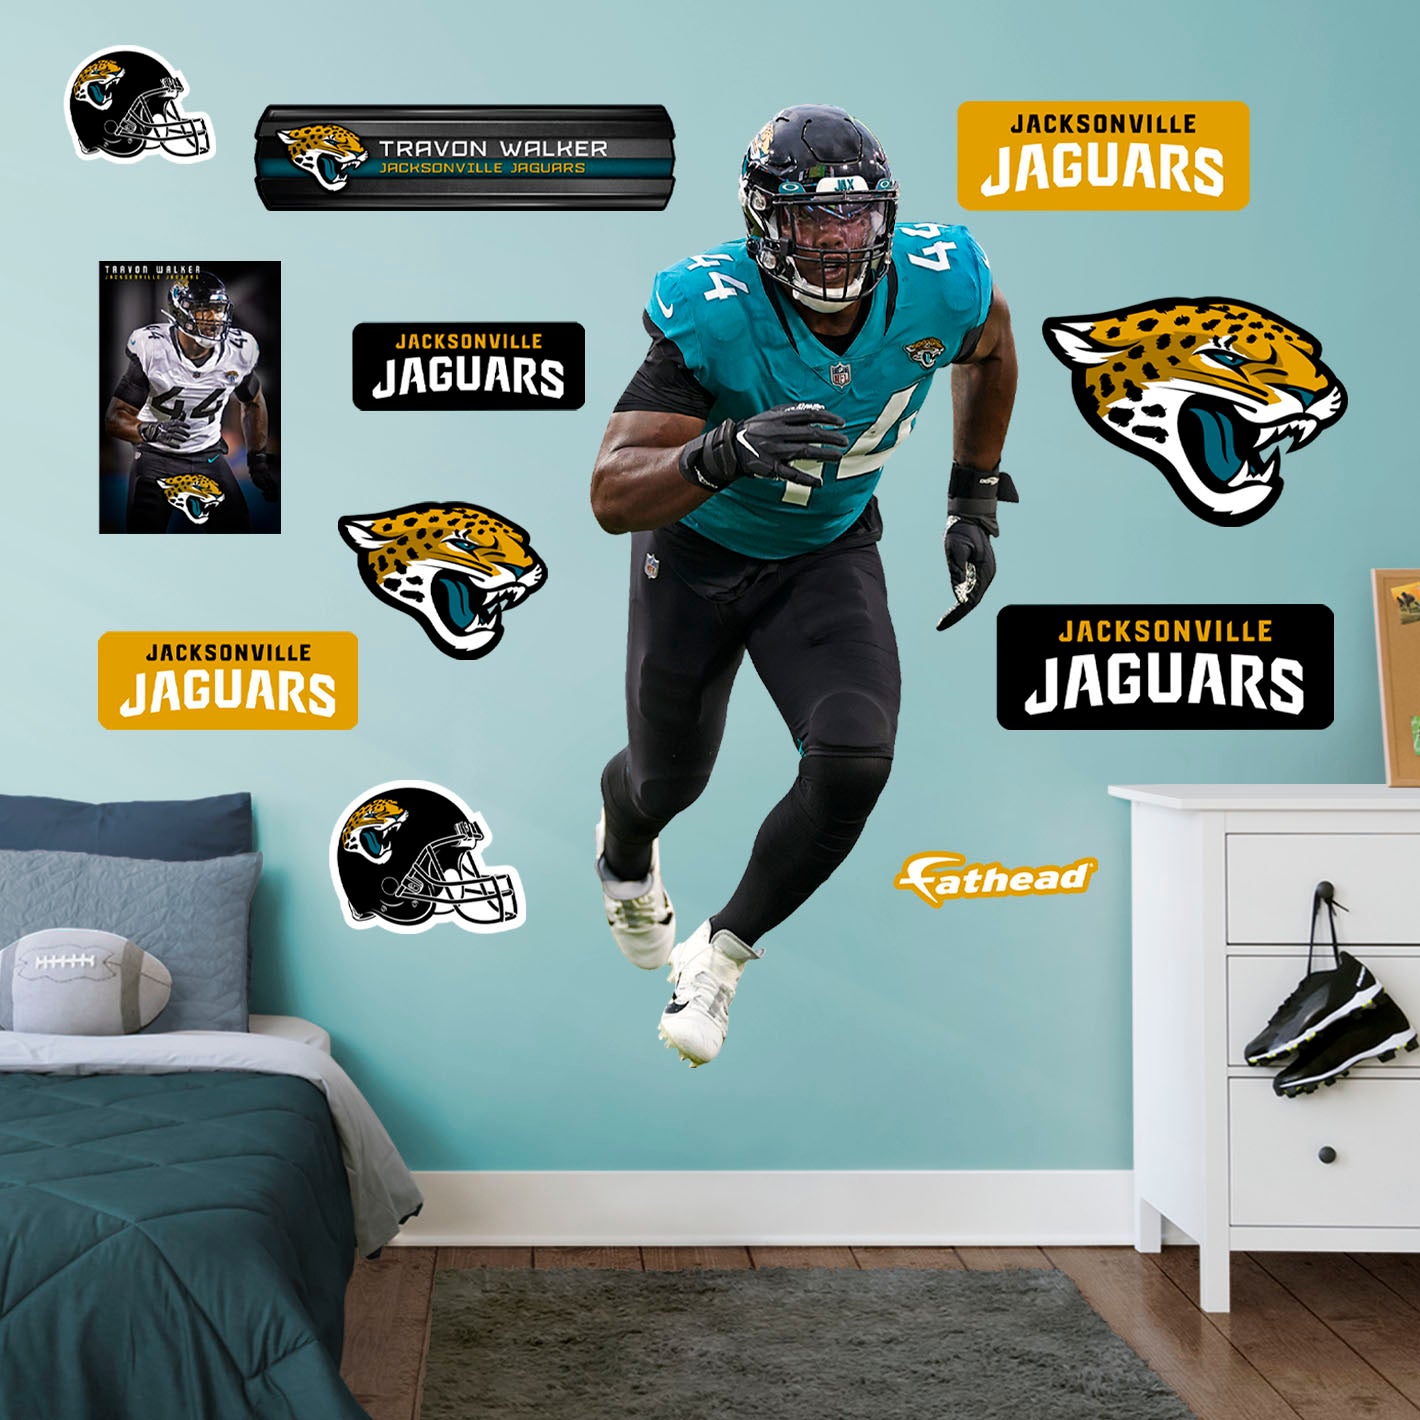 Jacksonville Jaguars: Travon Walker 2022 - Officially Licensed NFL Outdoor  Graphic